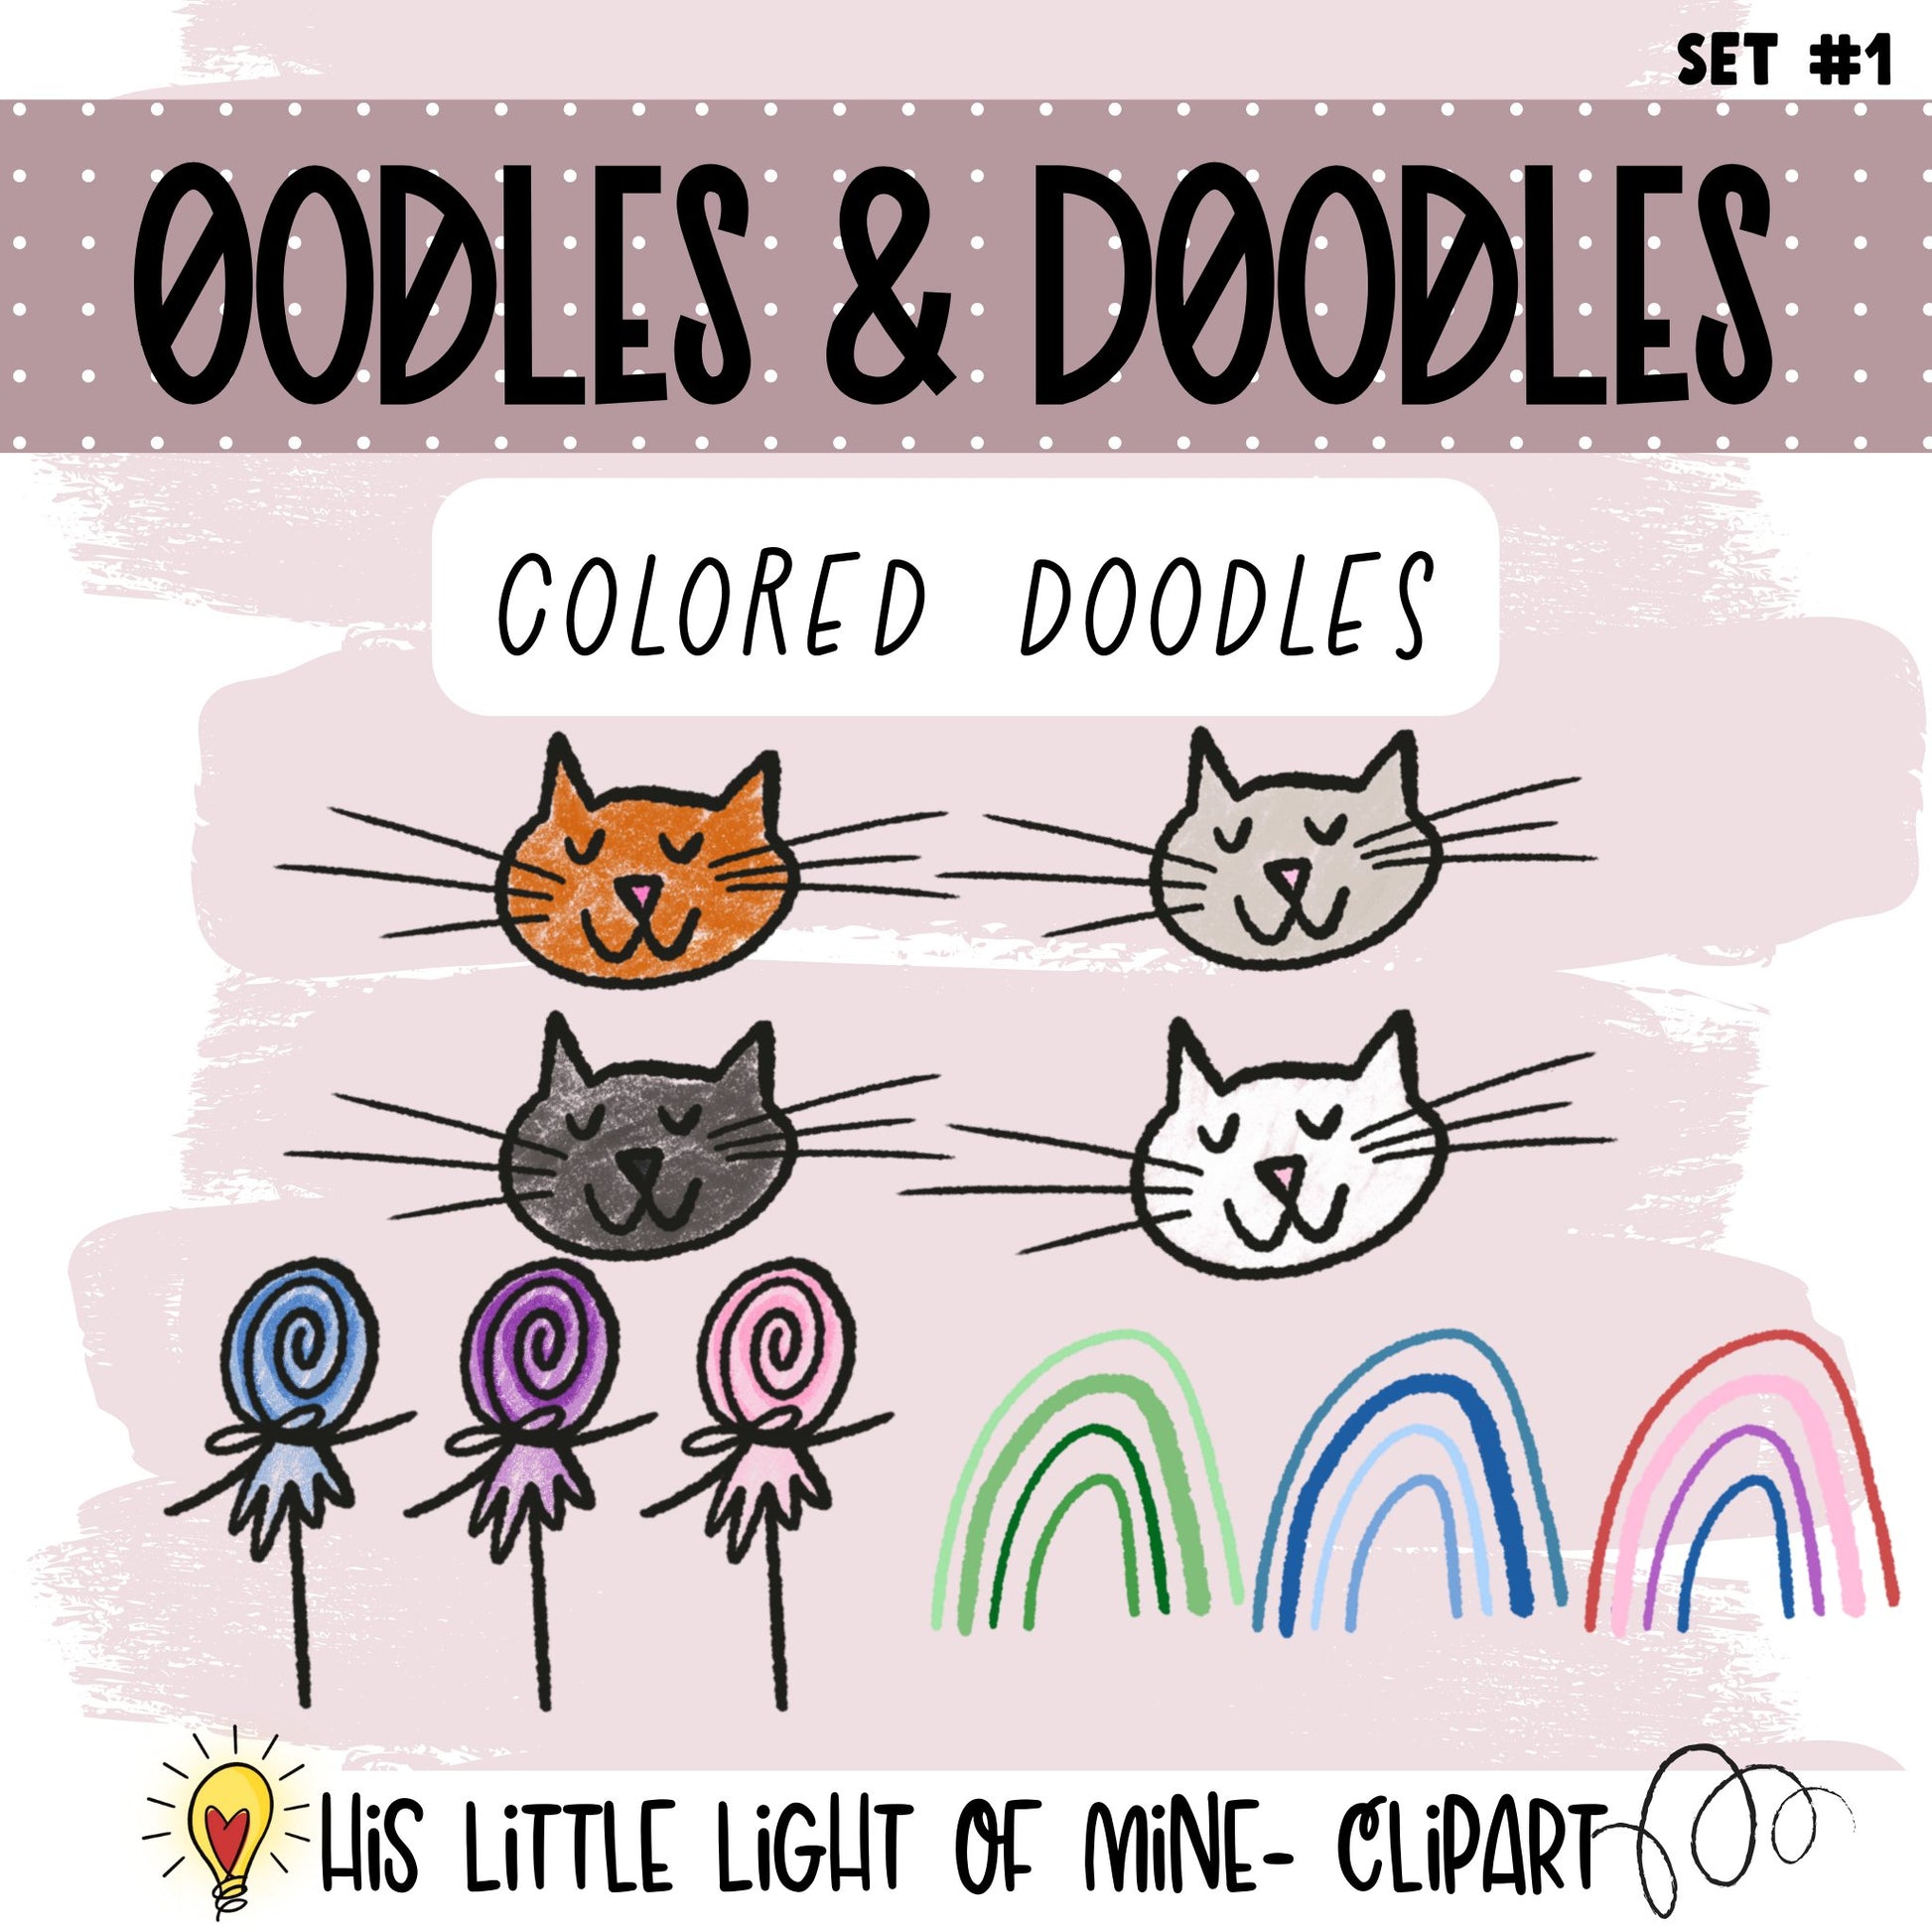 Oodles & Doodles Clip Art Set #1 clip art pack showing colored doodles of cats, lollipops and rainbows